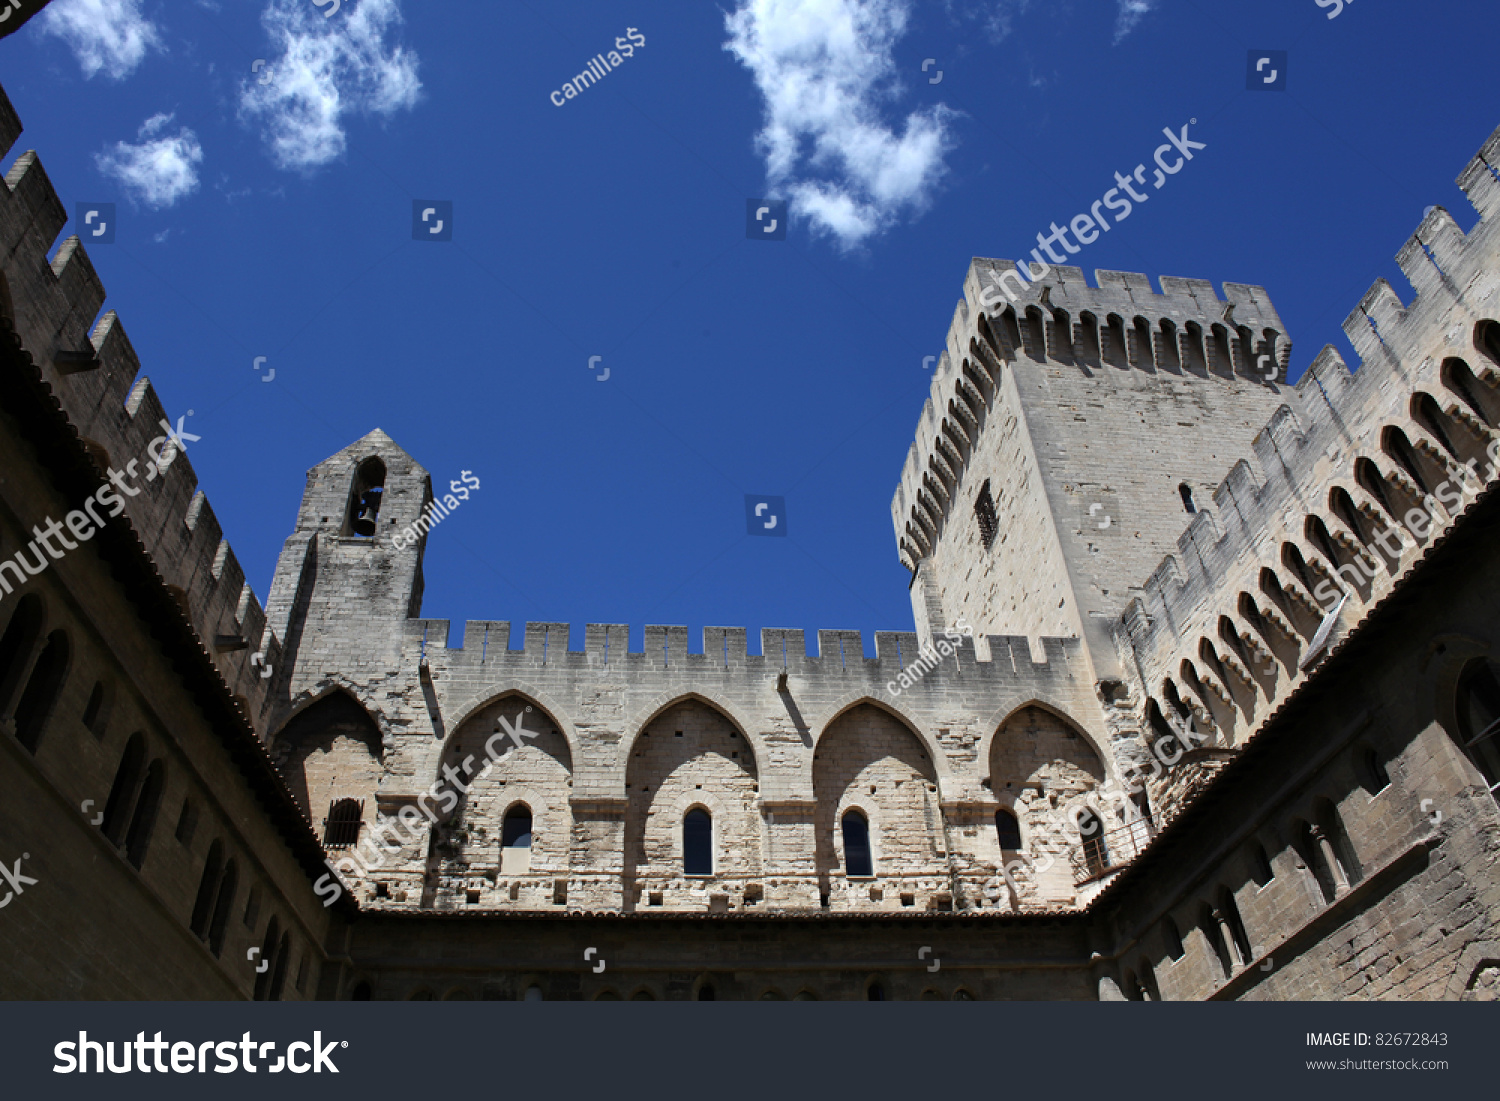 Avignon palace - France #82672843